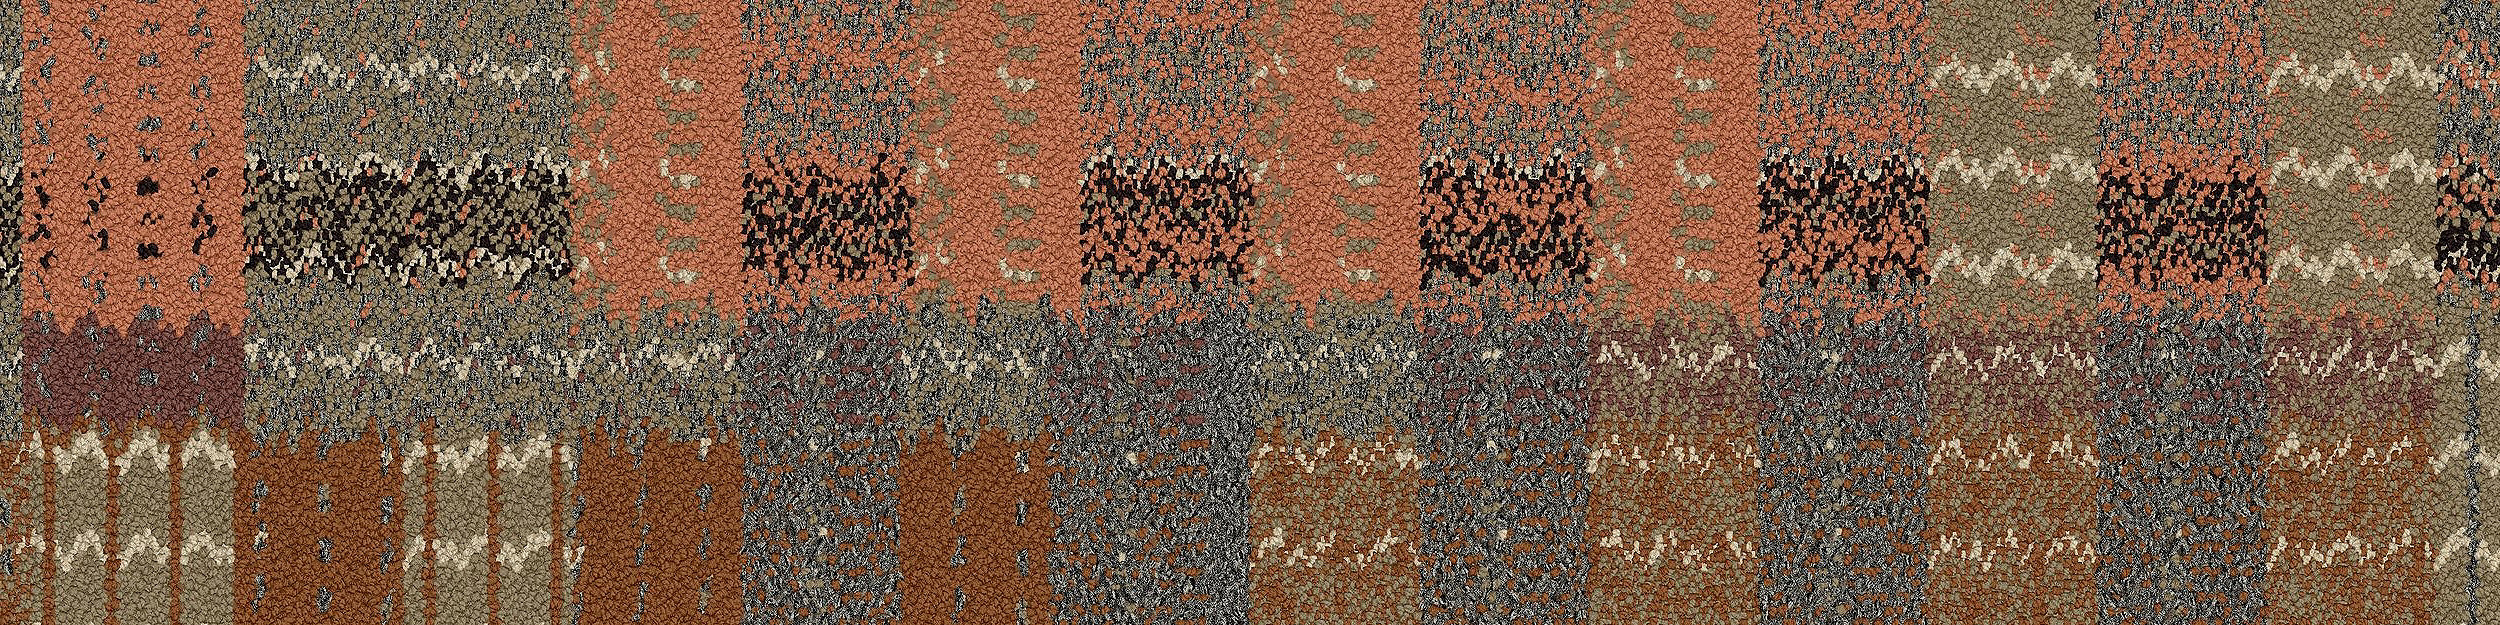 Social Fabric Carpet Tile In Spice imagen número 6